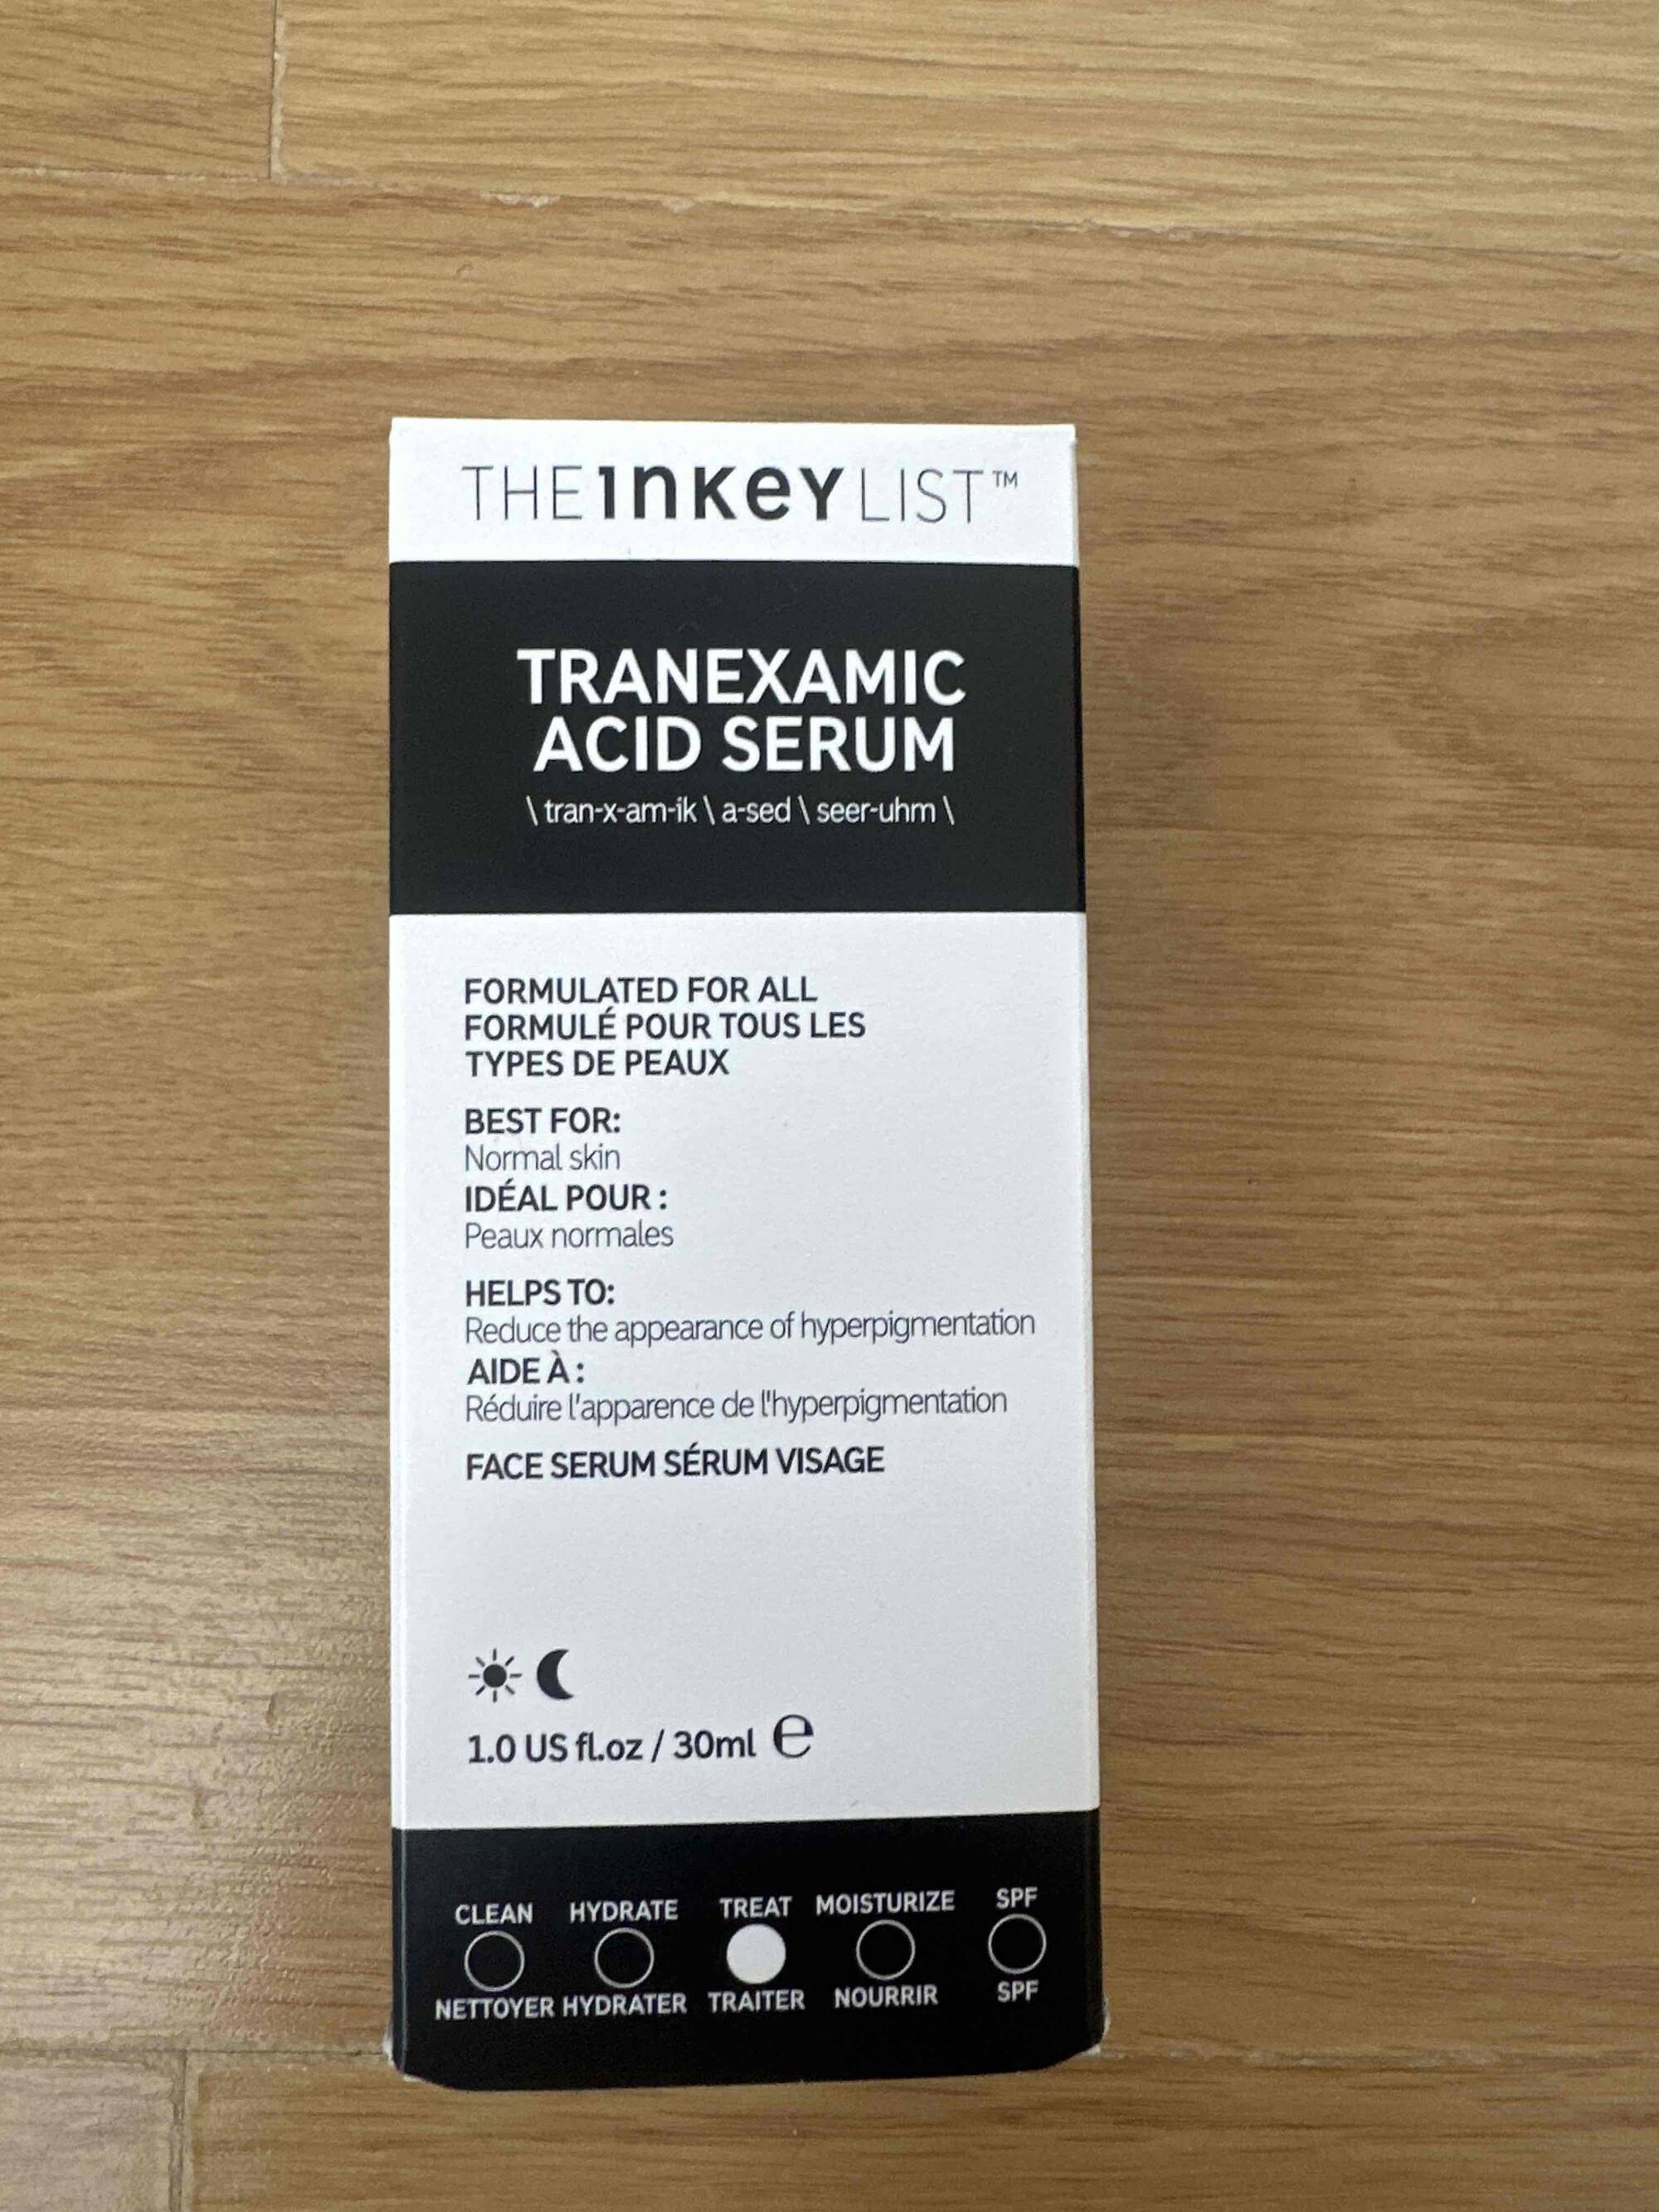 THE INKEY LIST - Tranexamic acid serum